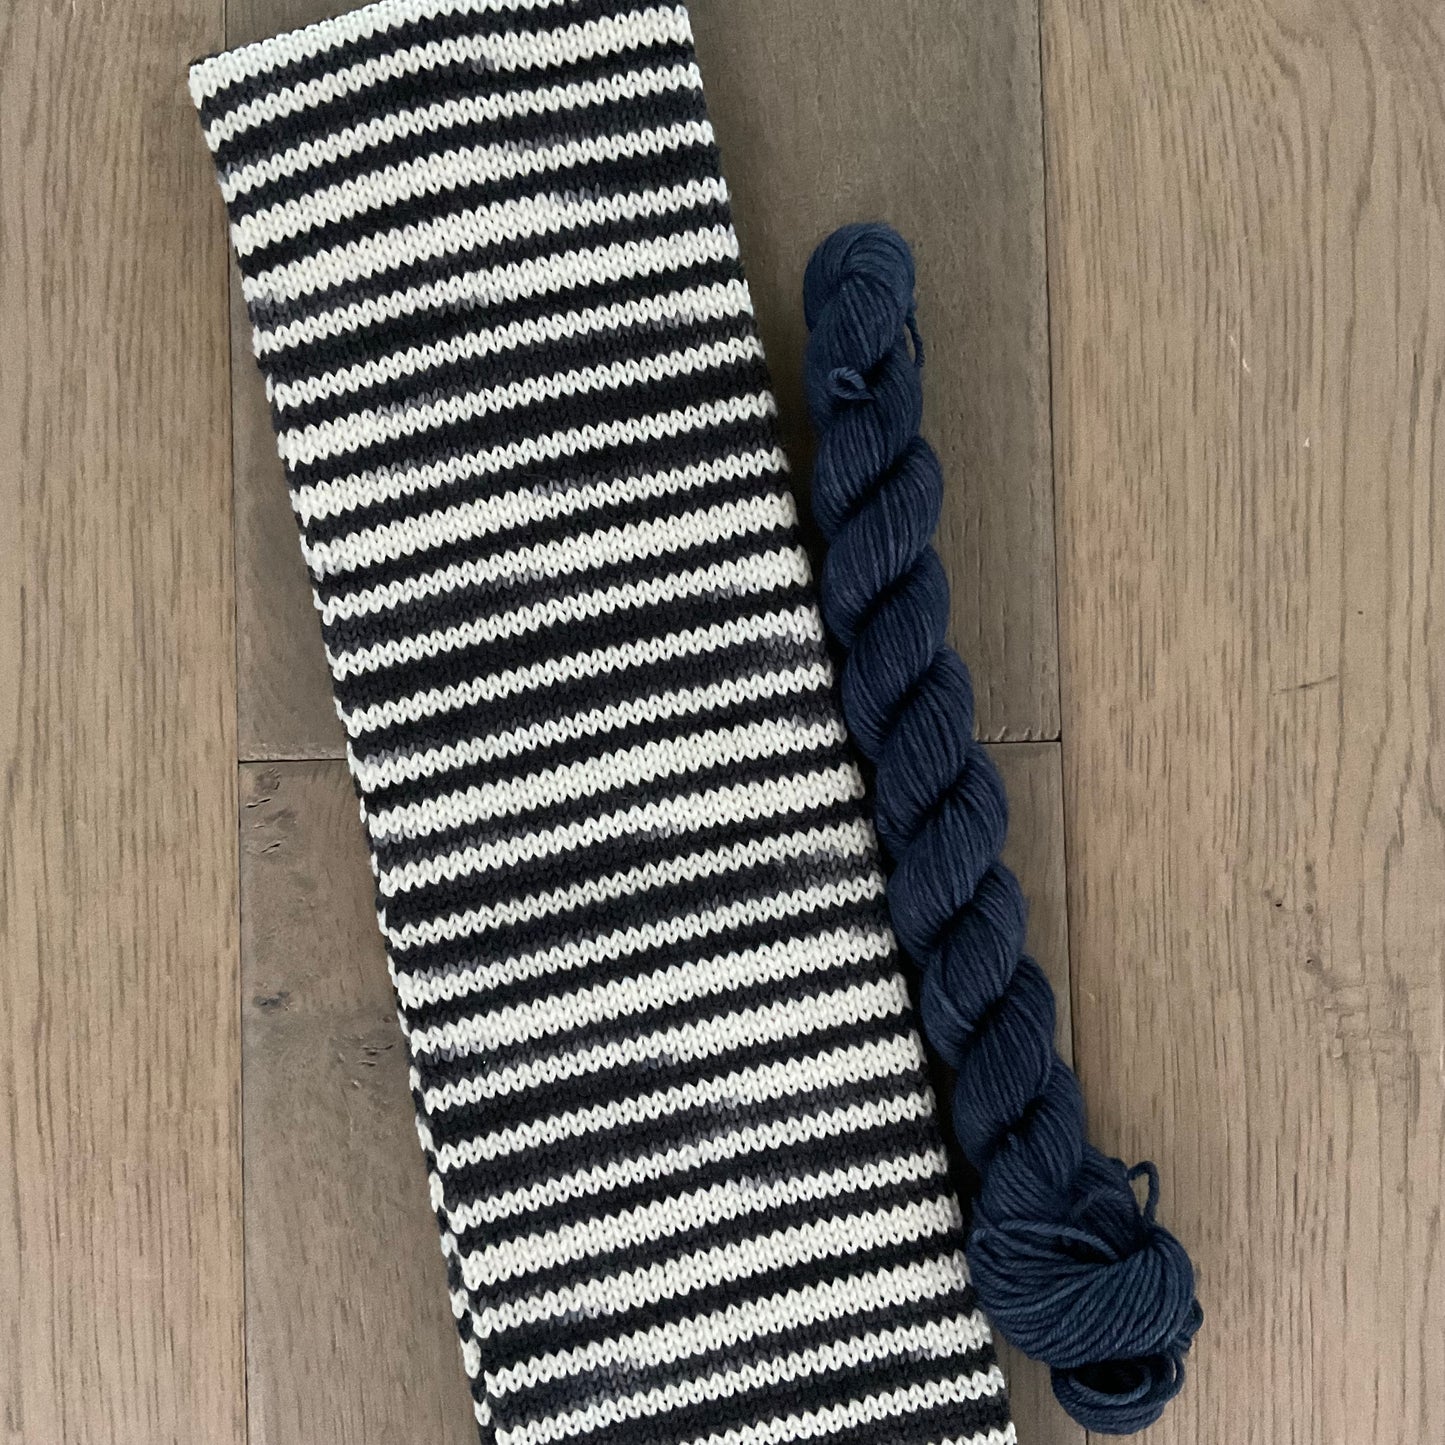 Cranked Discontinued Self-Striping Sock Sets